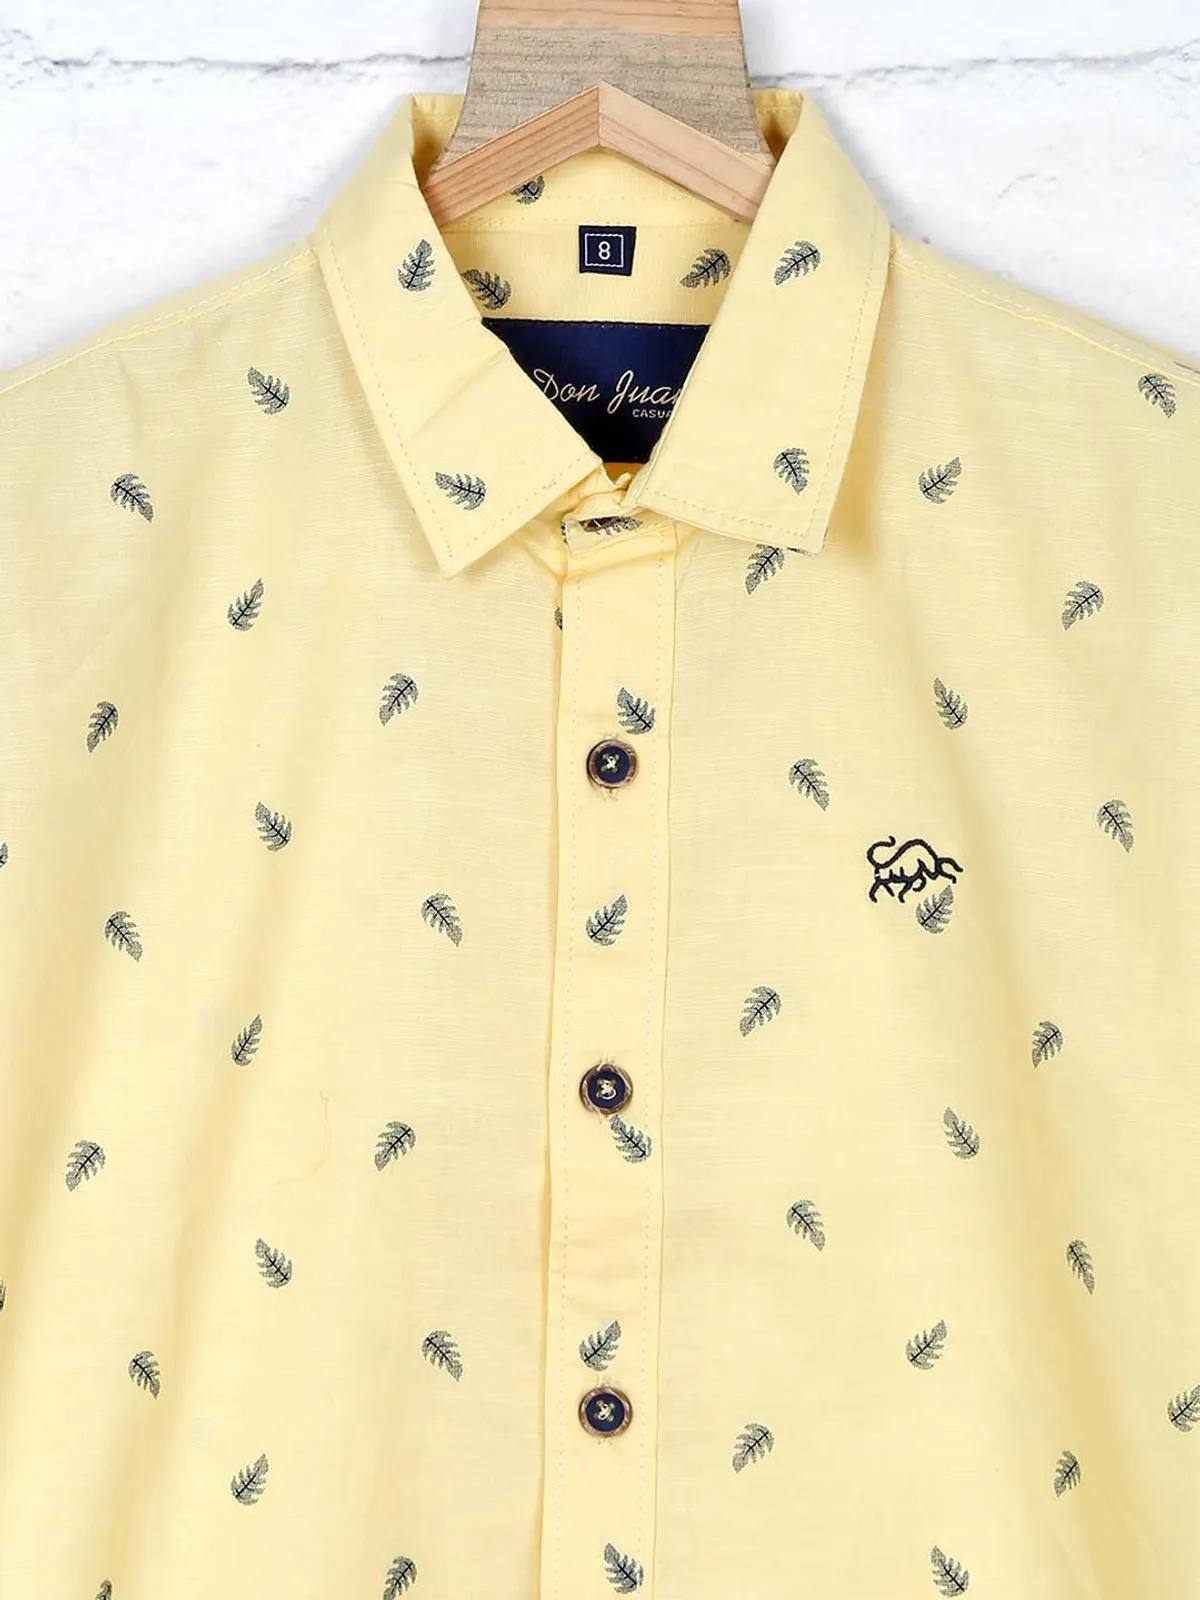 DNJS yellow printed cotton shirt